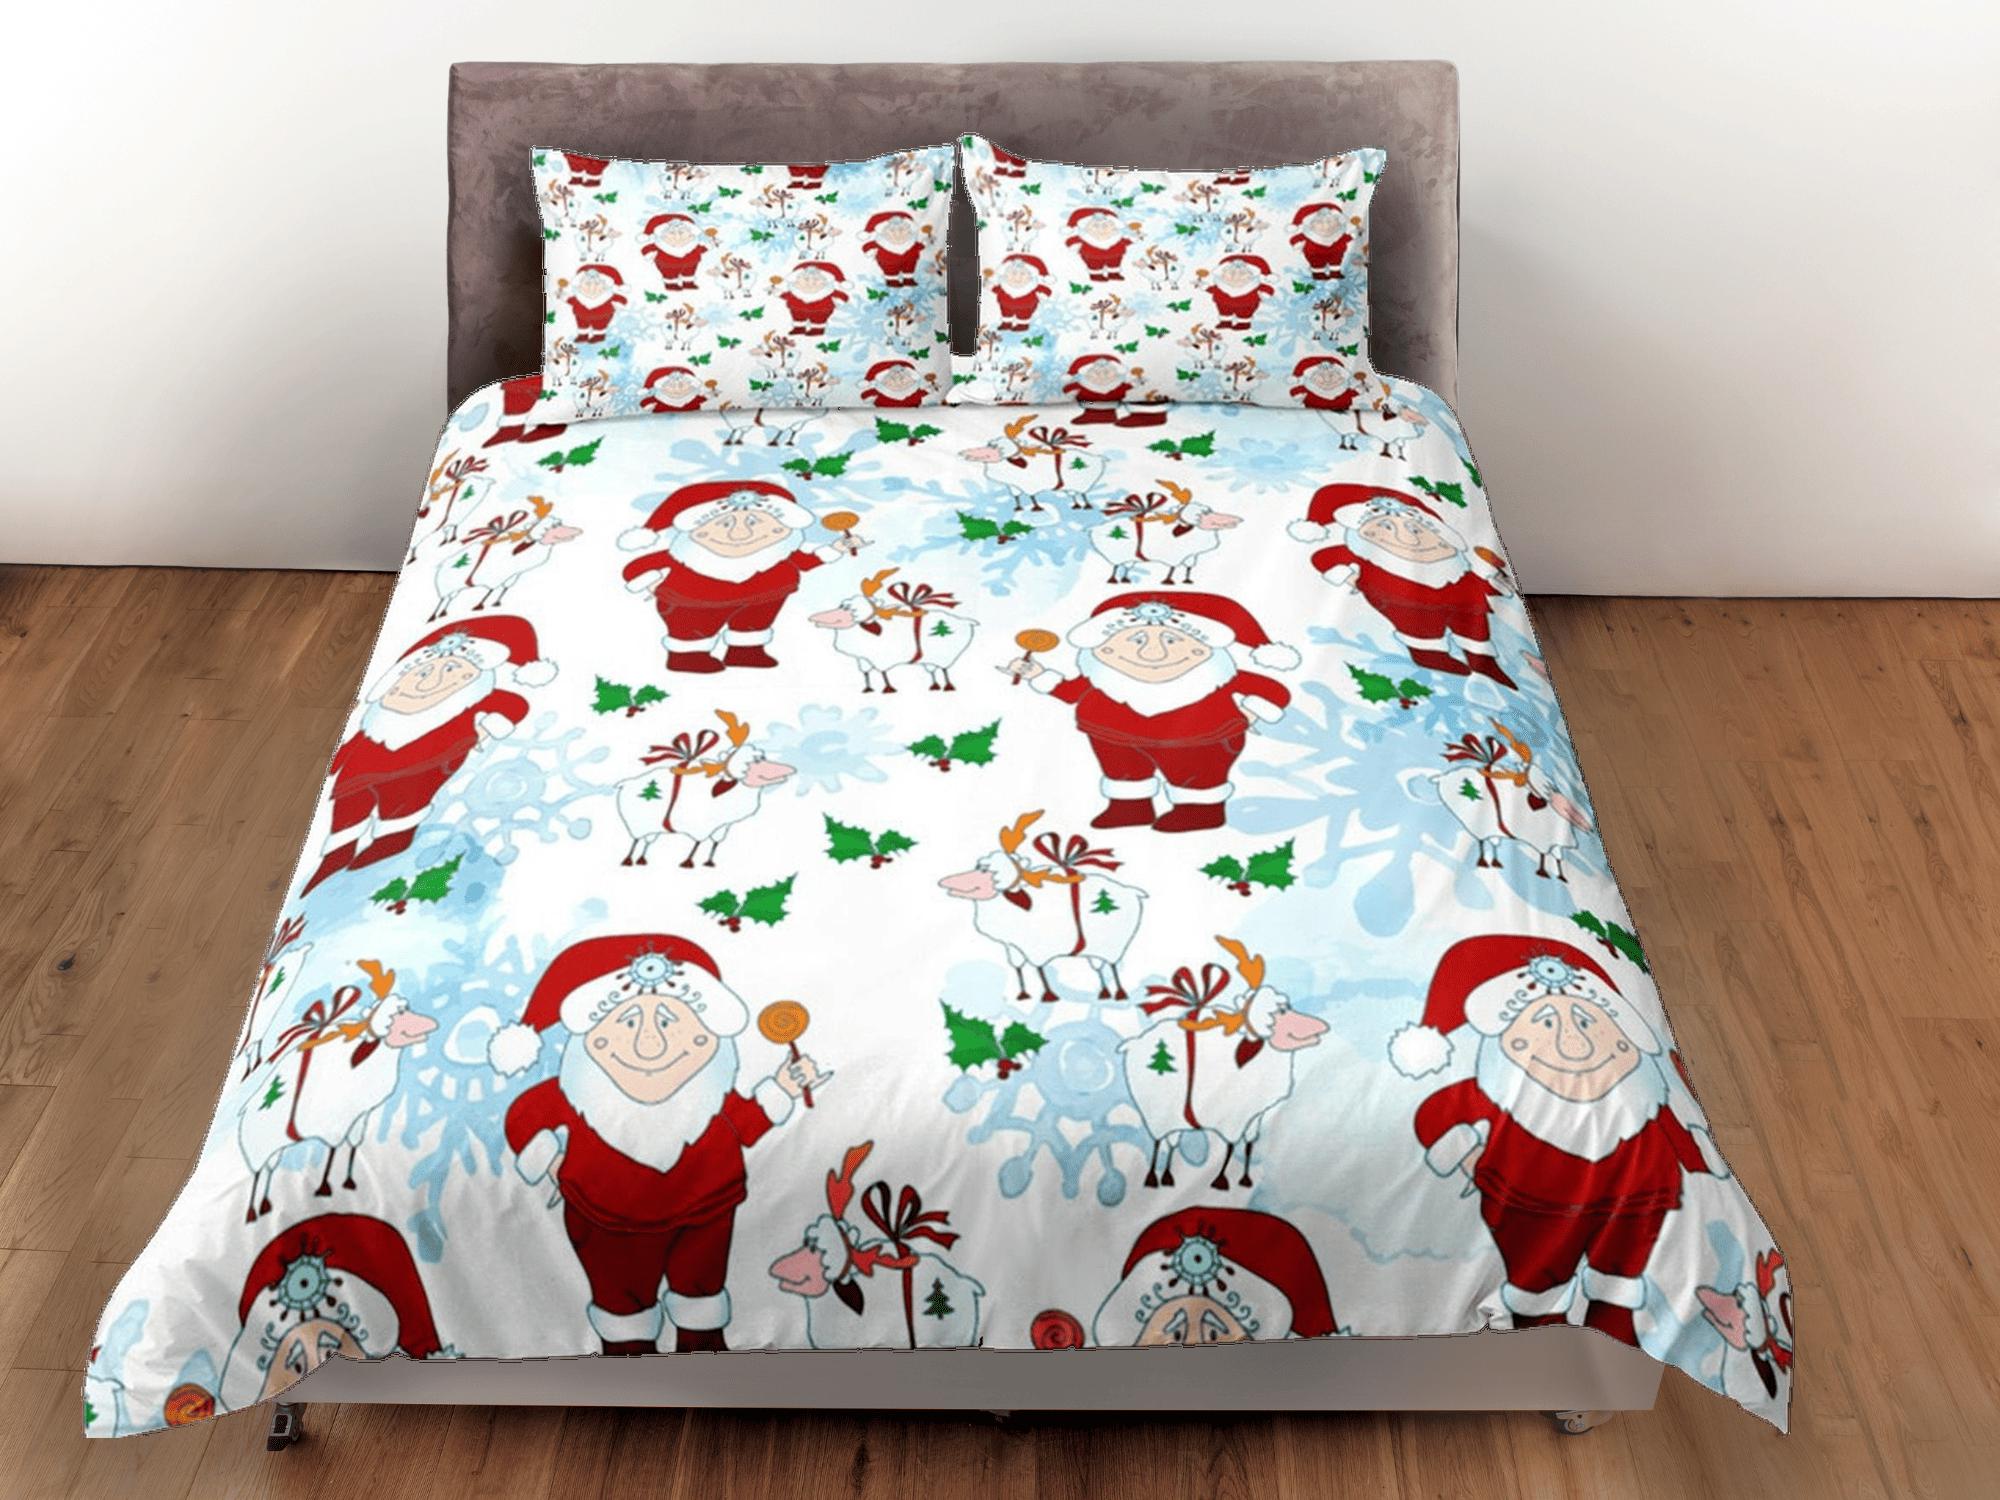 daintyduvet Santa claus and sheep duvet cover set, christmas full size bedding & pillowcase, college bedding, crib toddler bedding, holiday gift